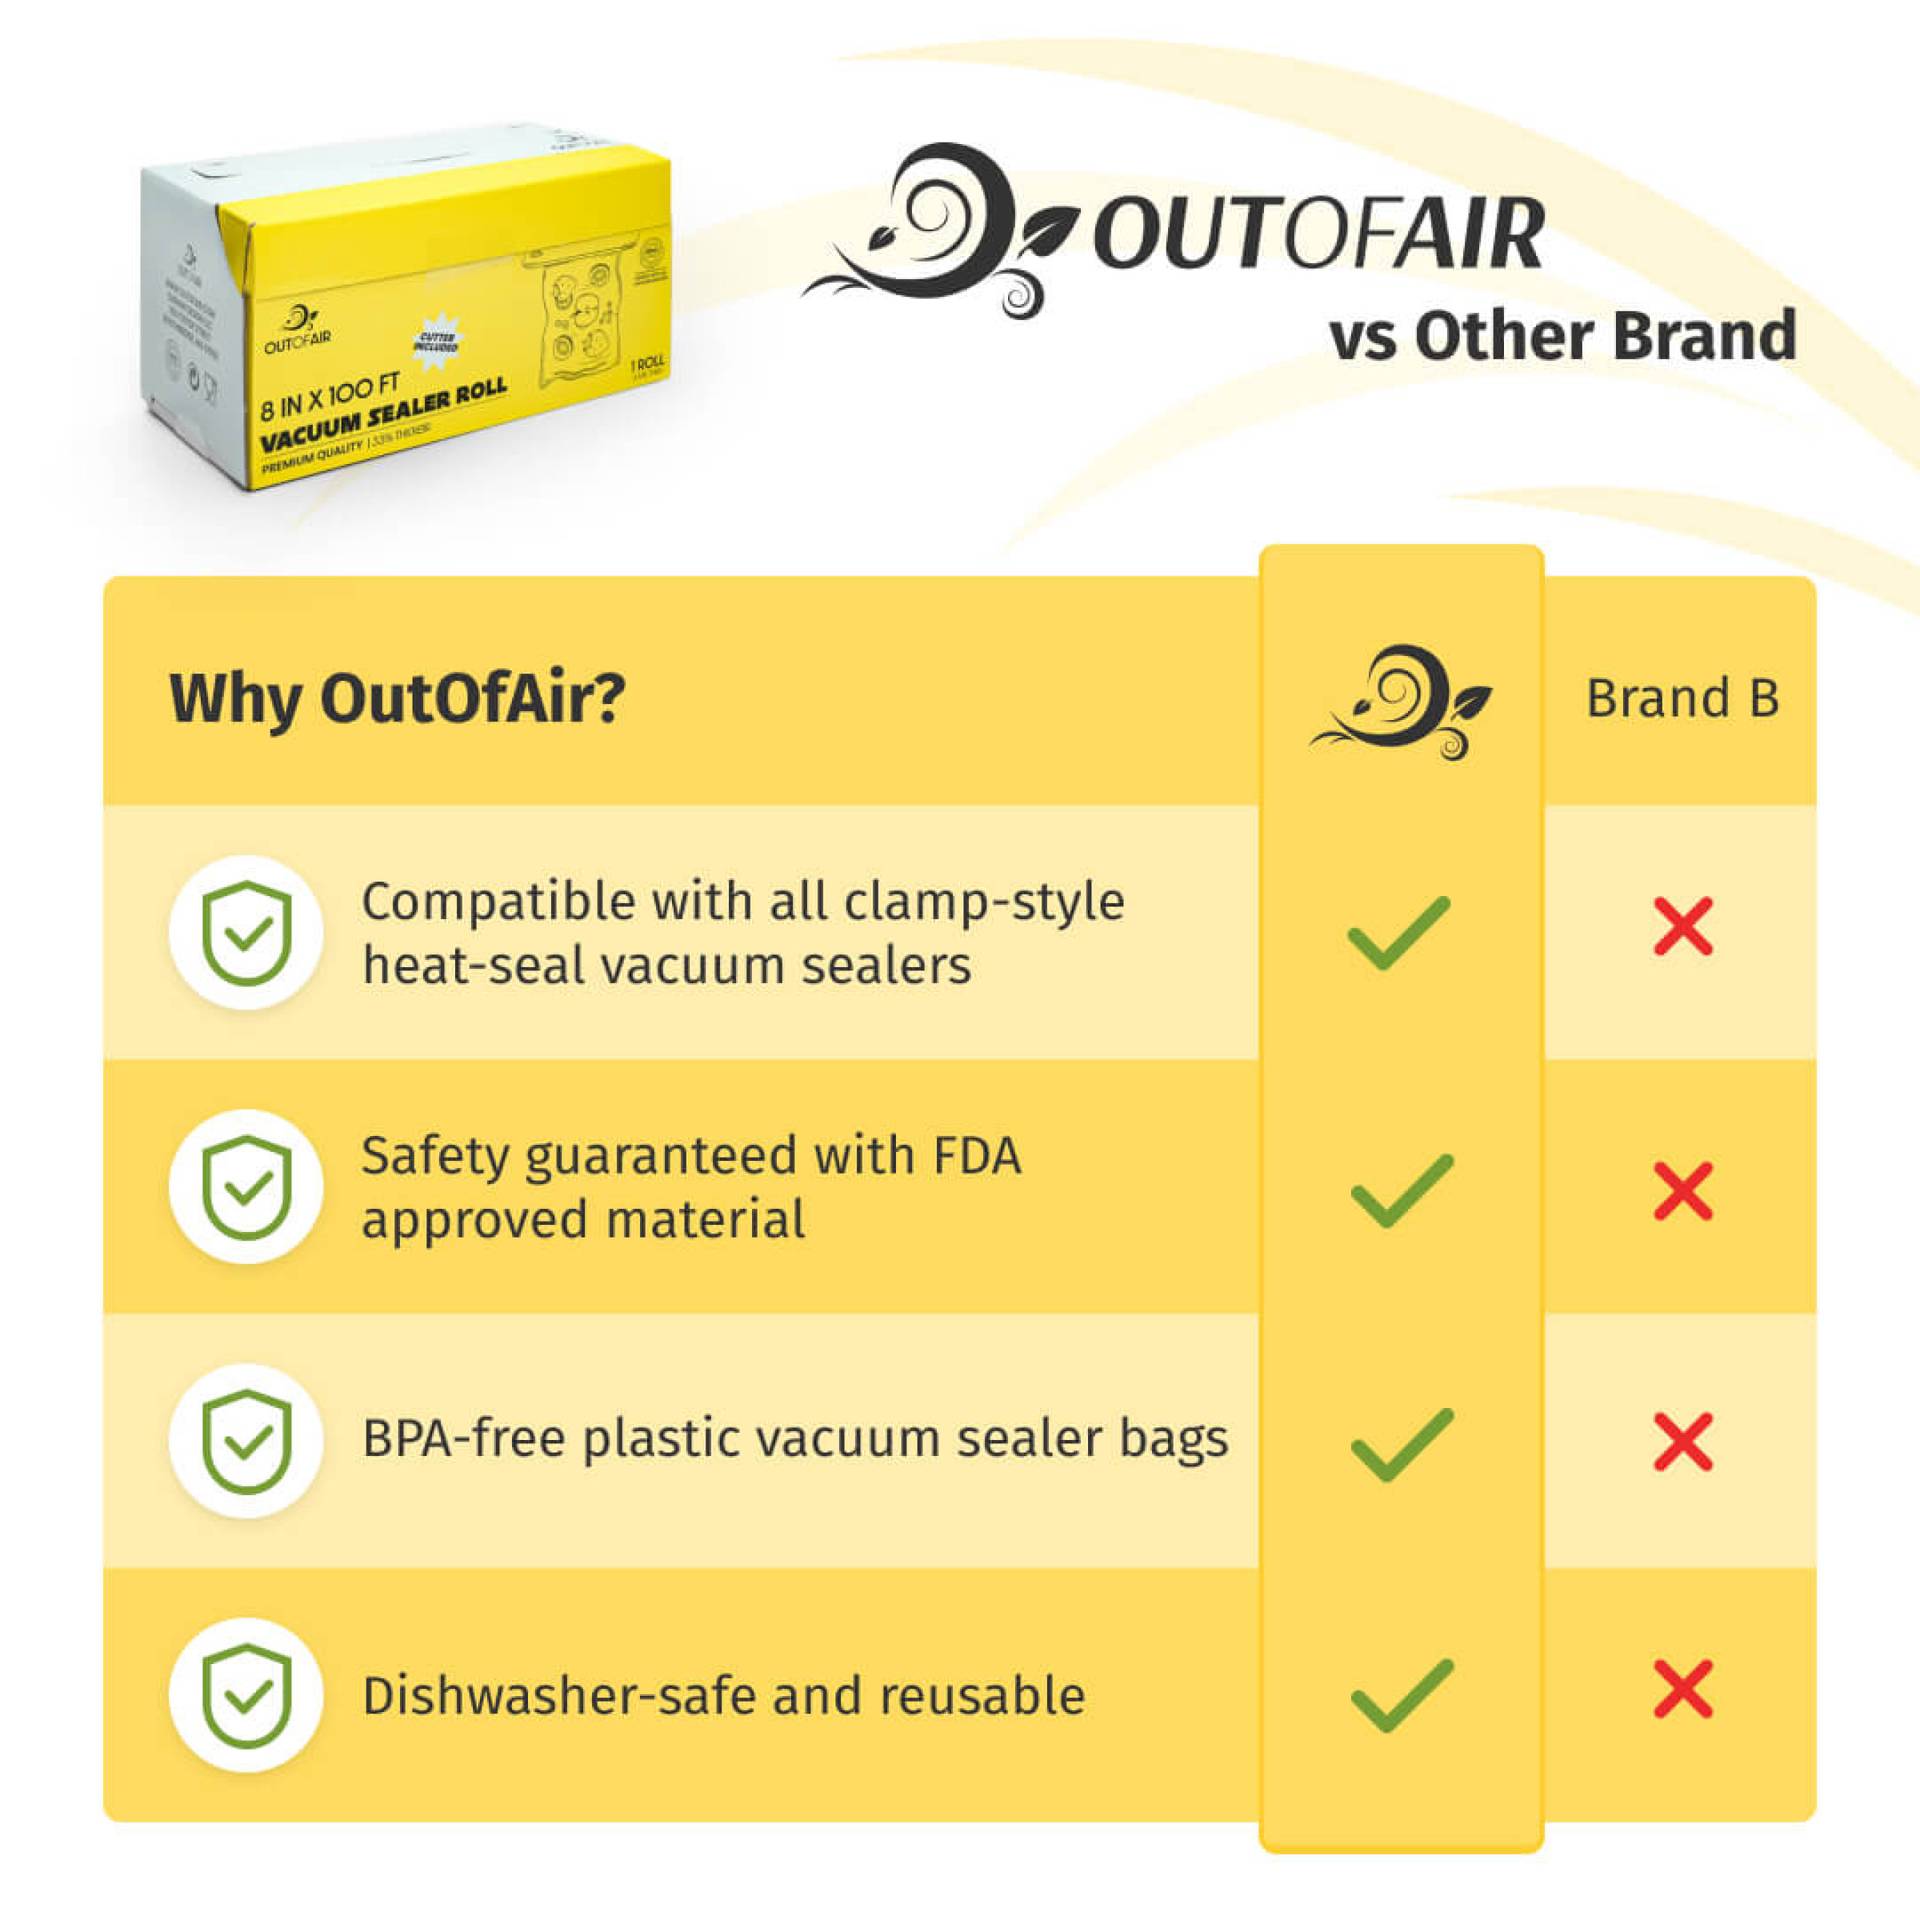 OutOfAir 8x100 mega roll vacuum sealer bags with dispenser box